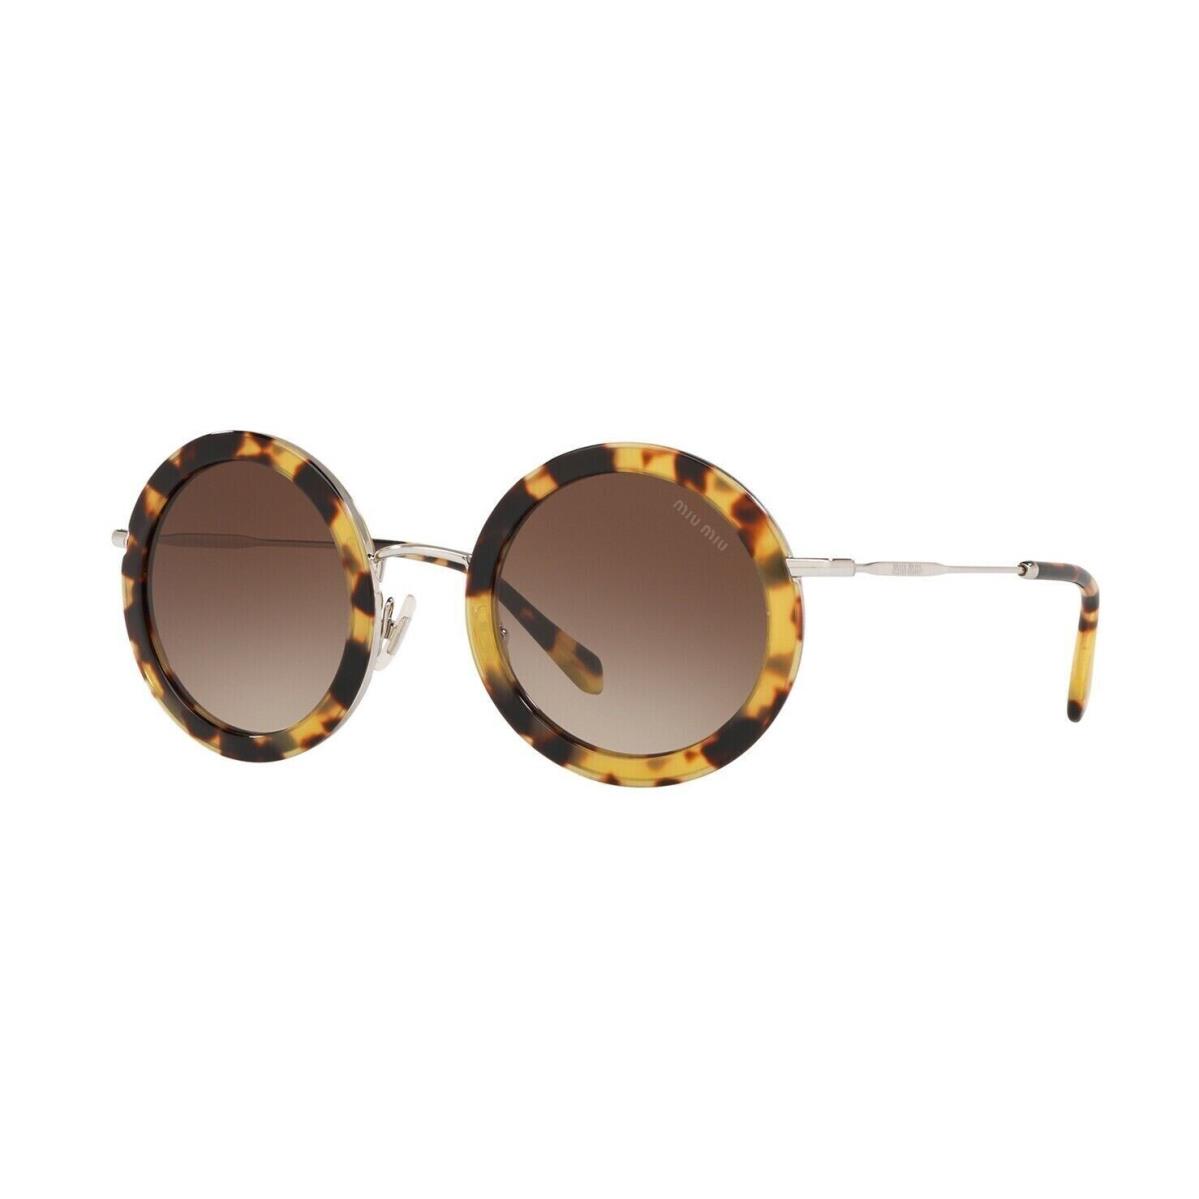 Miu Miu Ring Smu 59U Blonde Havana/brown Shaded 7S0-6S1 Sunglasses - Frame: Brown, Lens: Brown Shaded